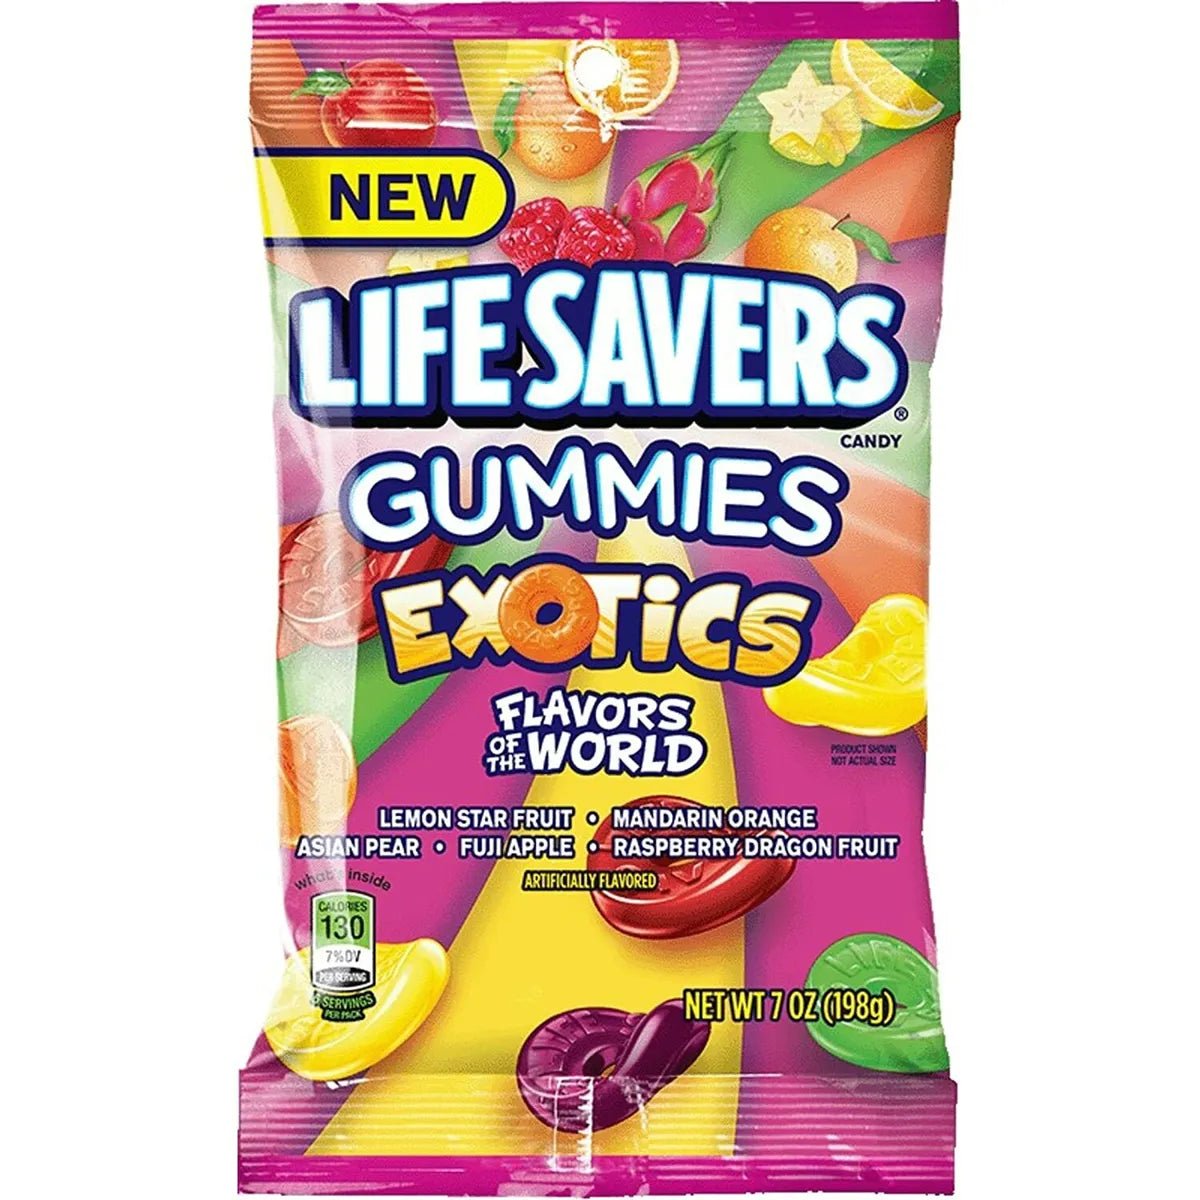 Lifesavers Gummies Exotics - sucretoilebec